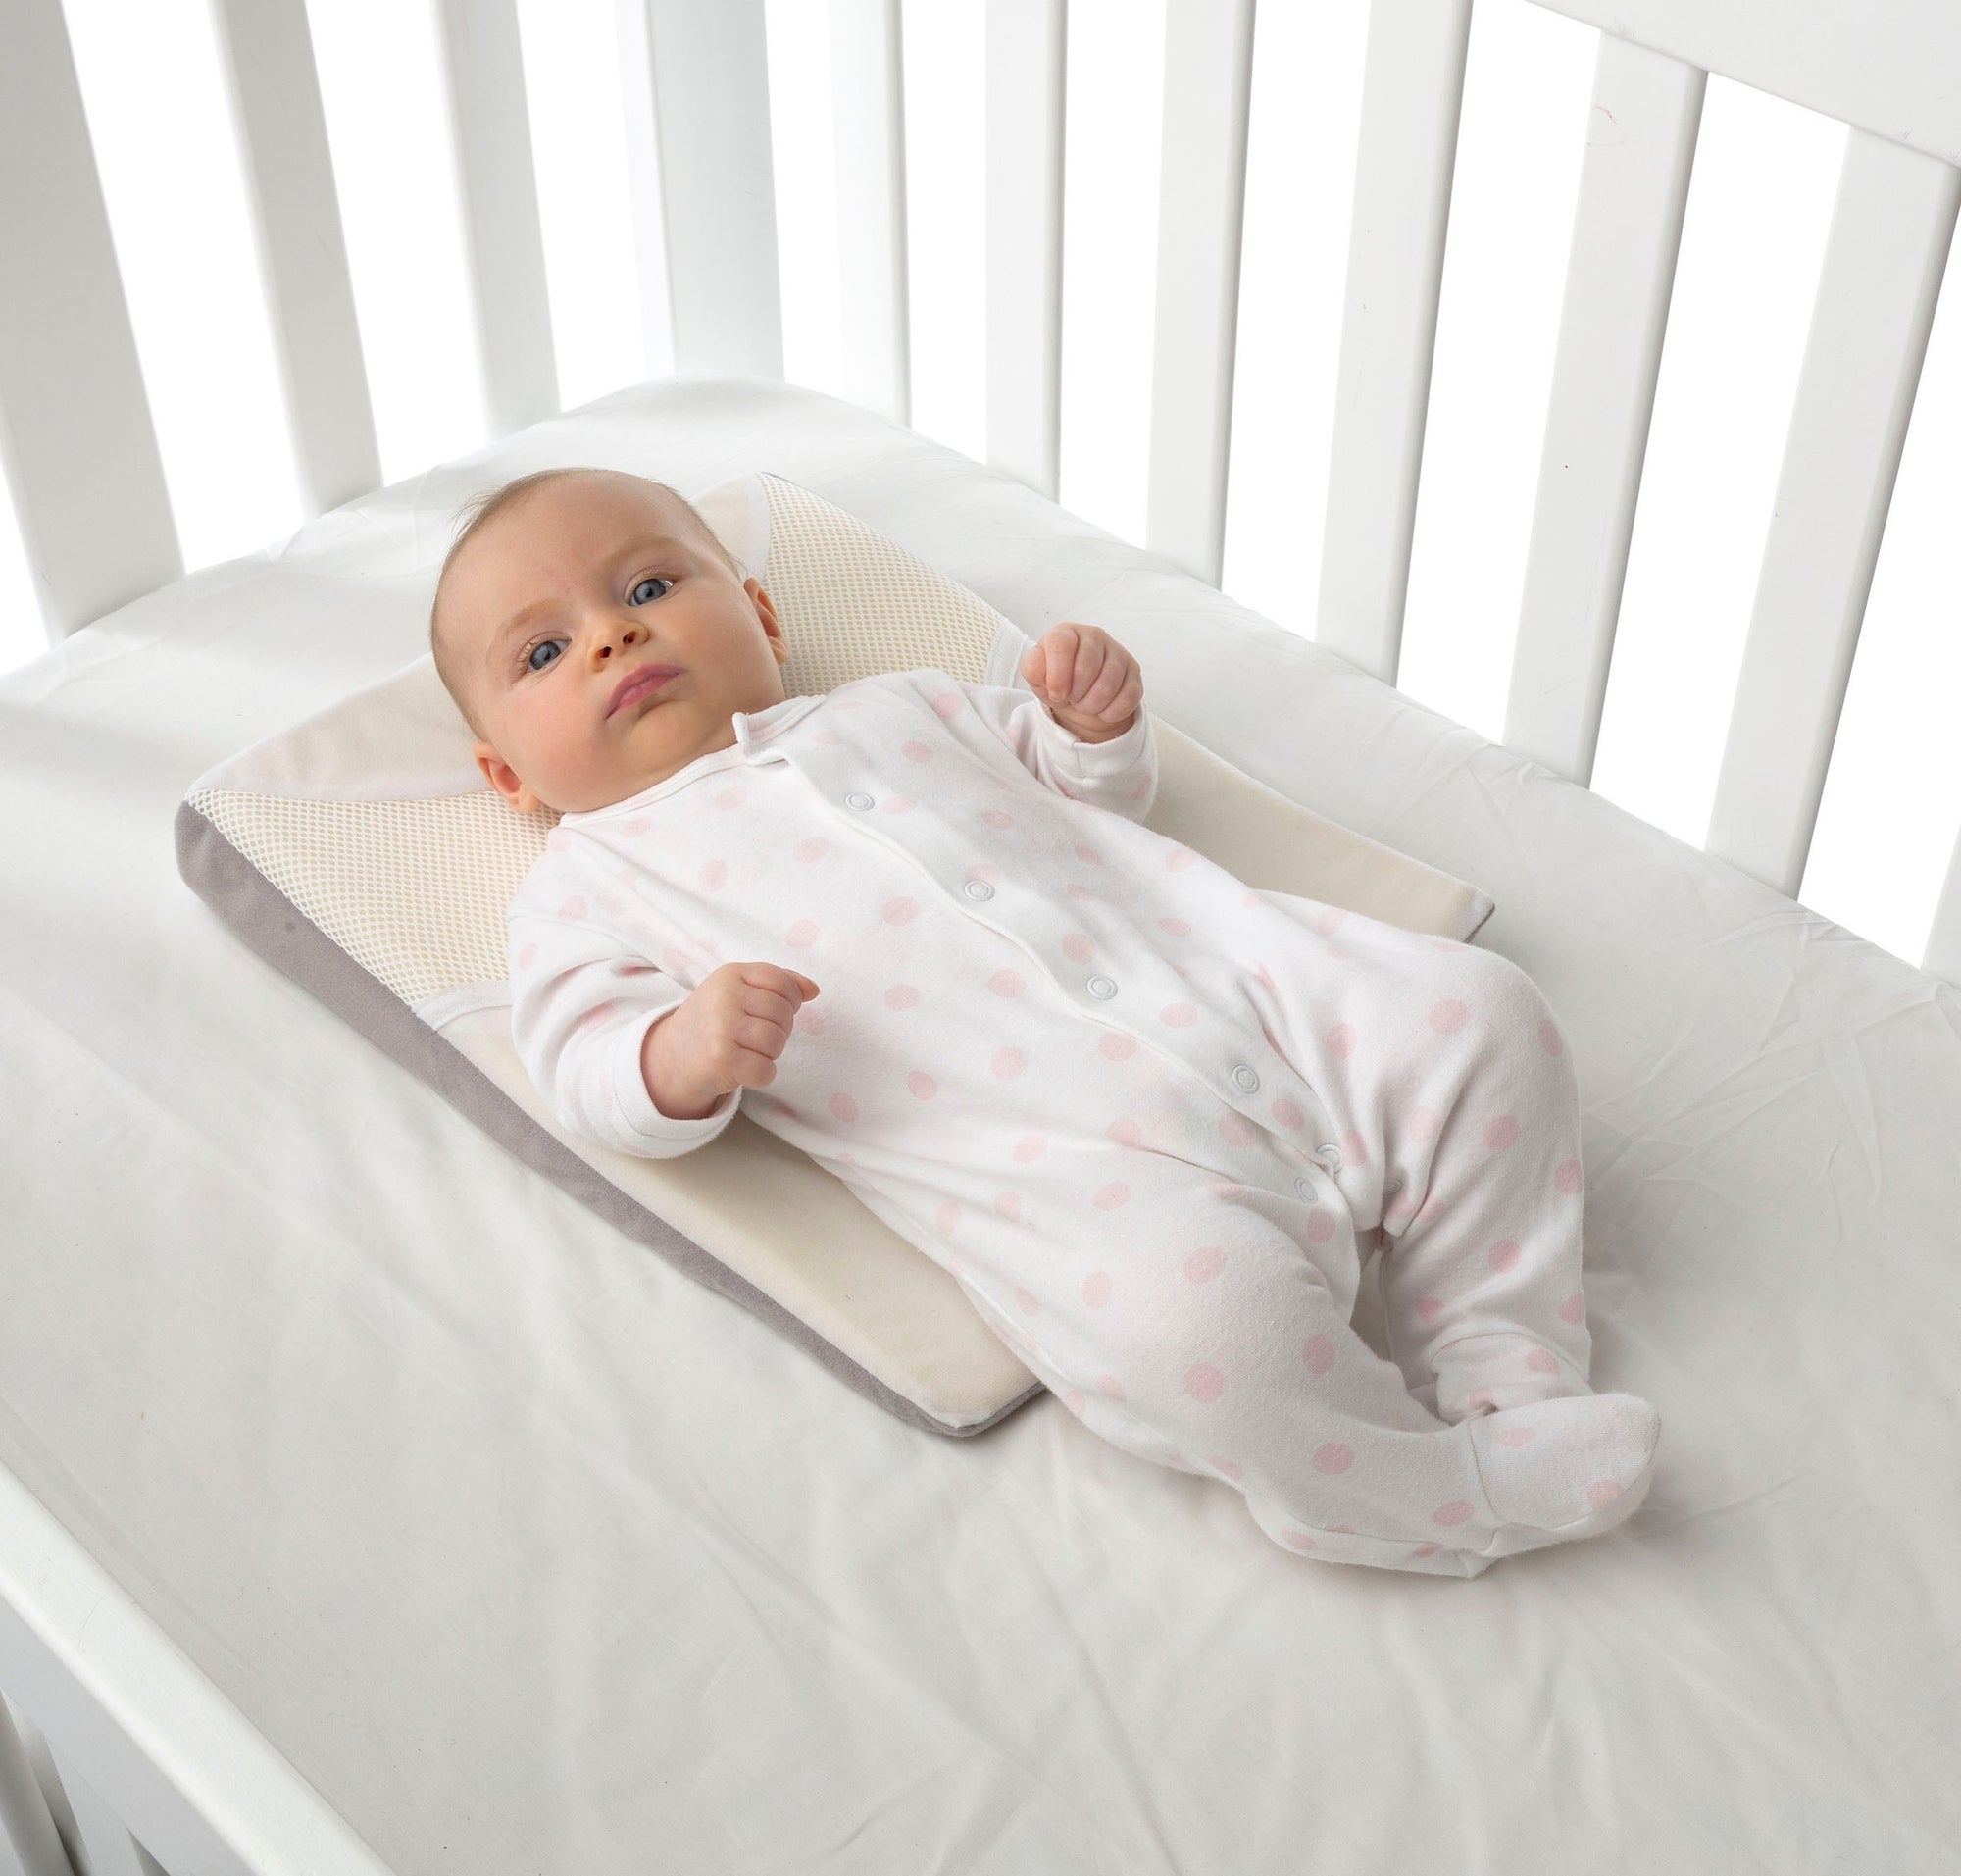 Baby Sleep Positioner with Adjustable Elevated Wedge